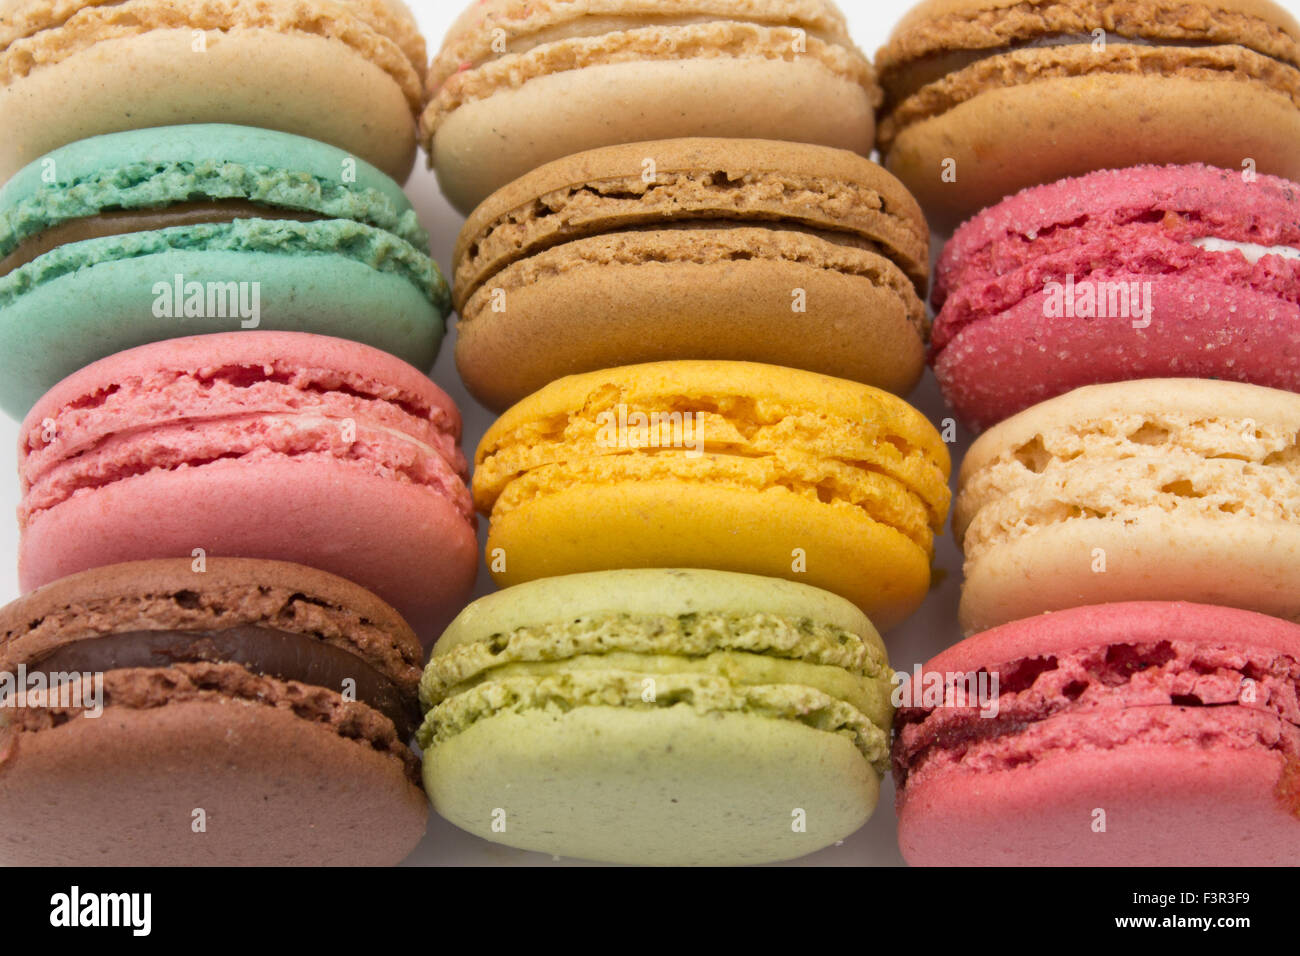 Macarons Kekse - französische Kuchen/Kekse Gebäck Stockfoto